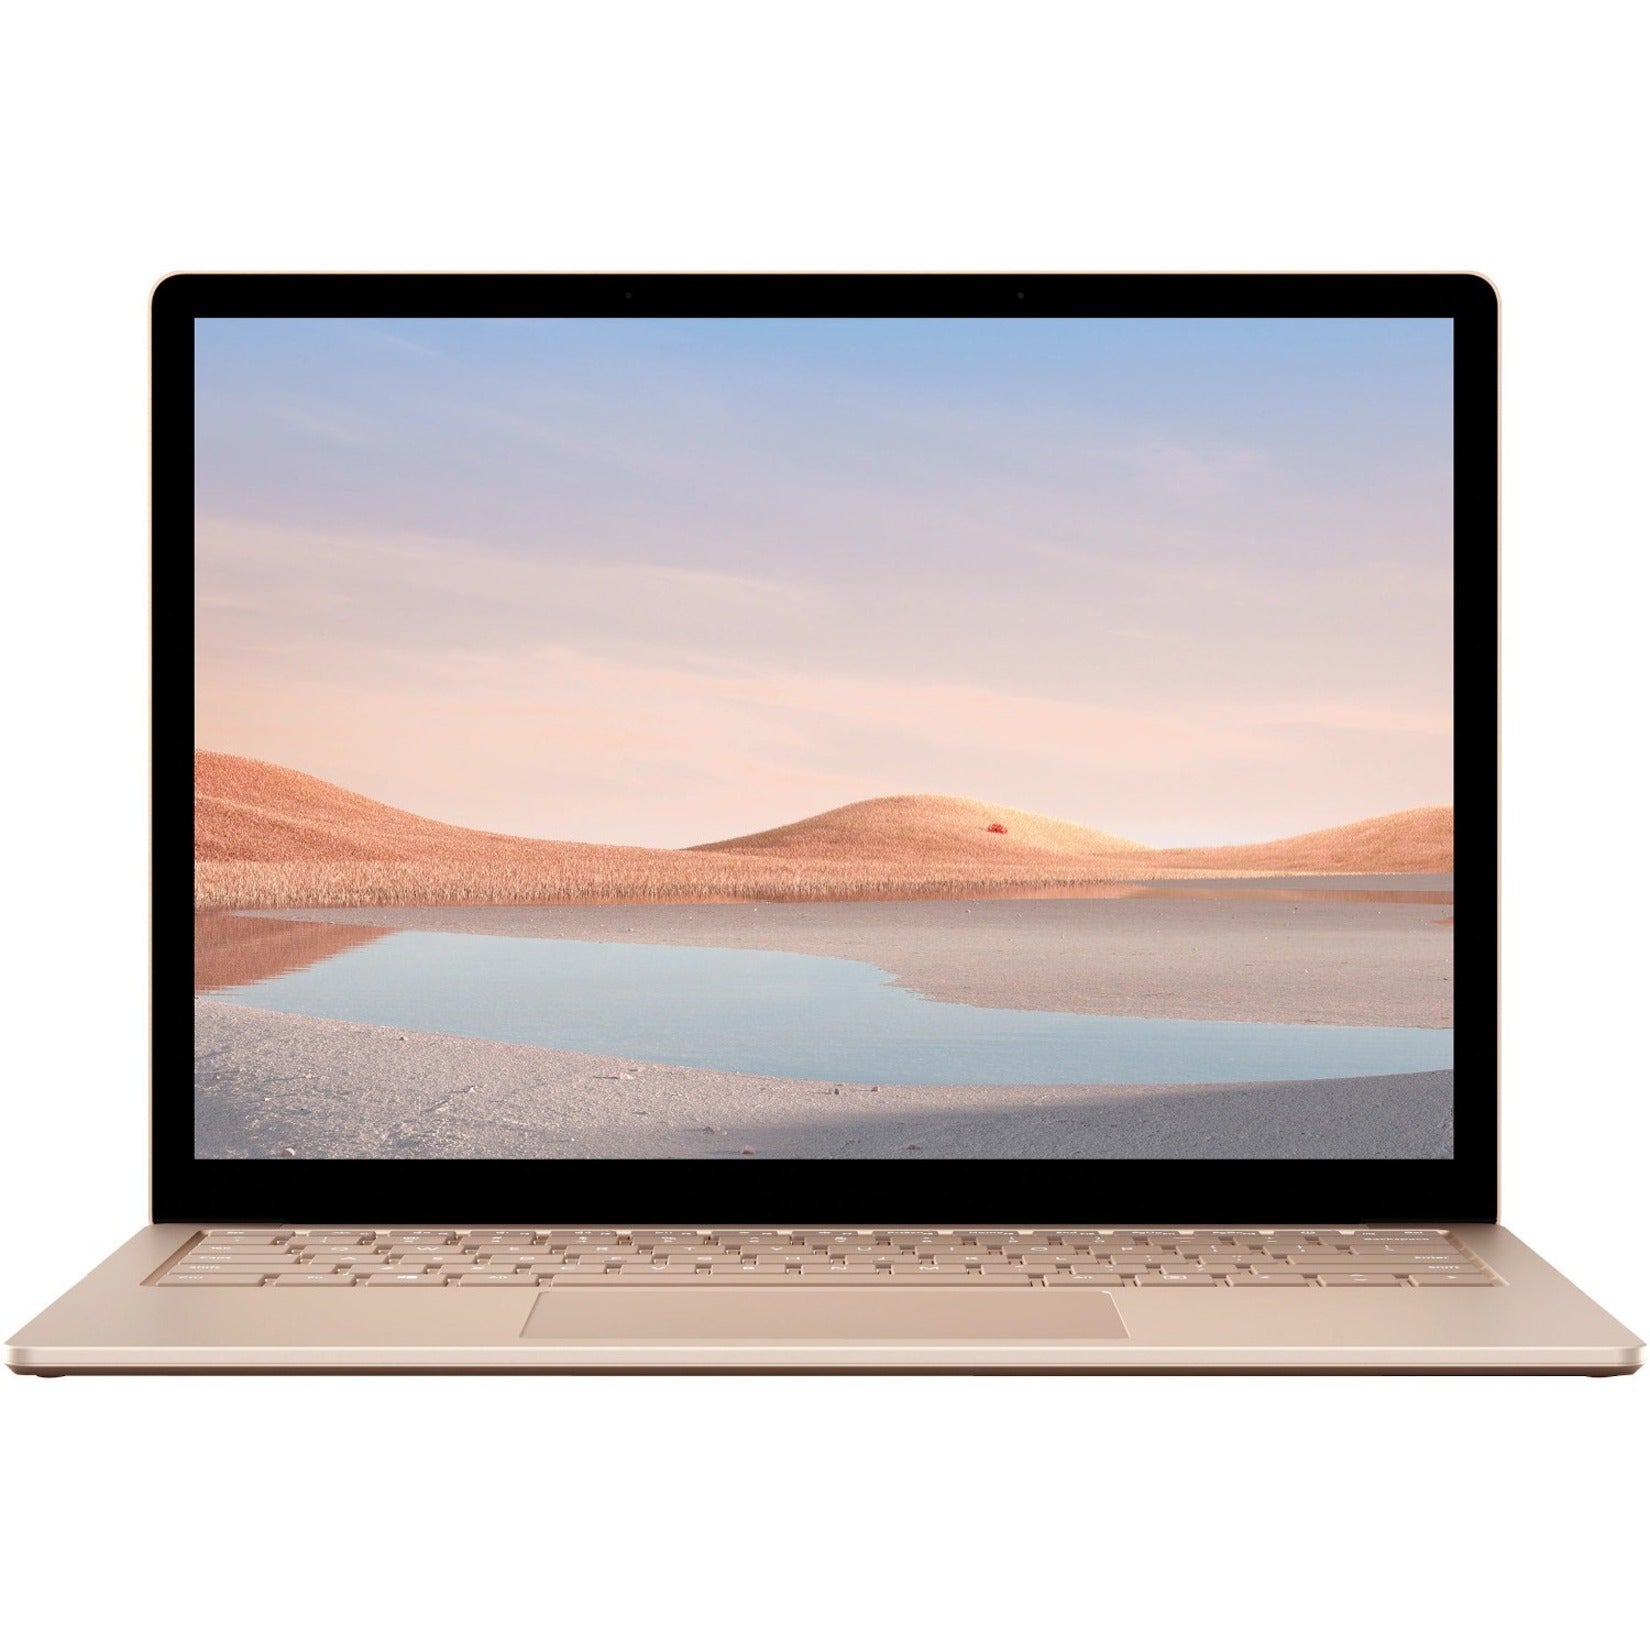 Microsoft 5BV-00058 Surface Laptop 4 Notebook, 13.5, i5, 8GB RAM, 512GB SSD, Windows 10 Pro